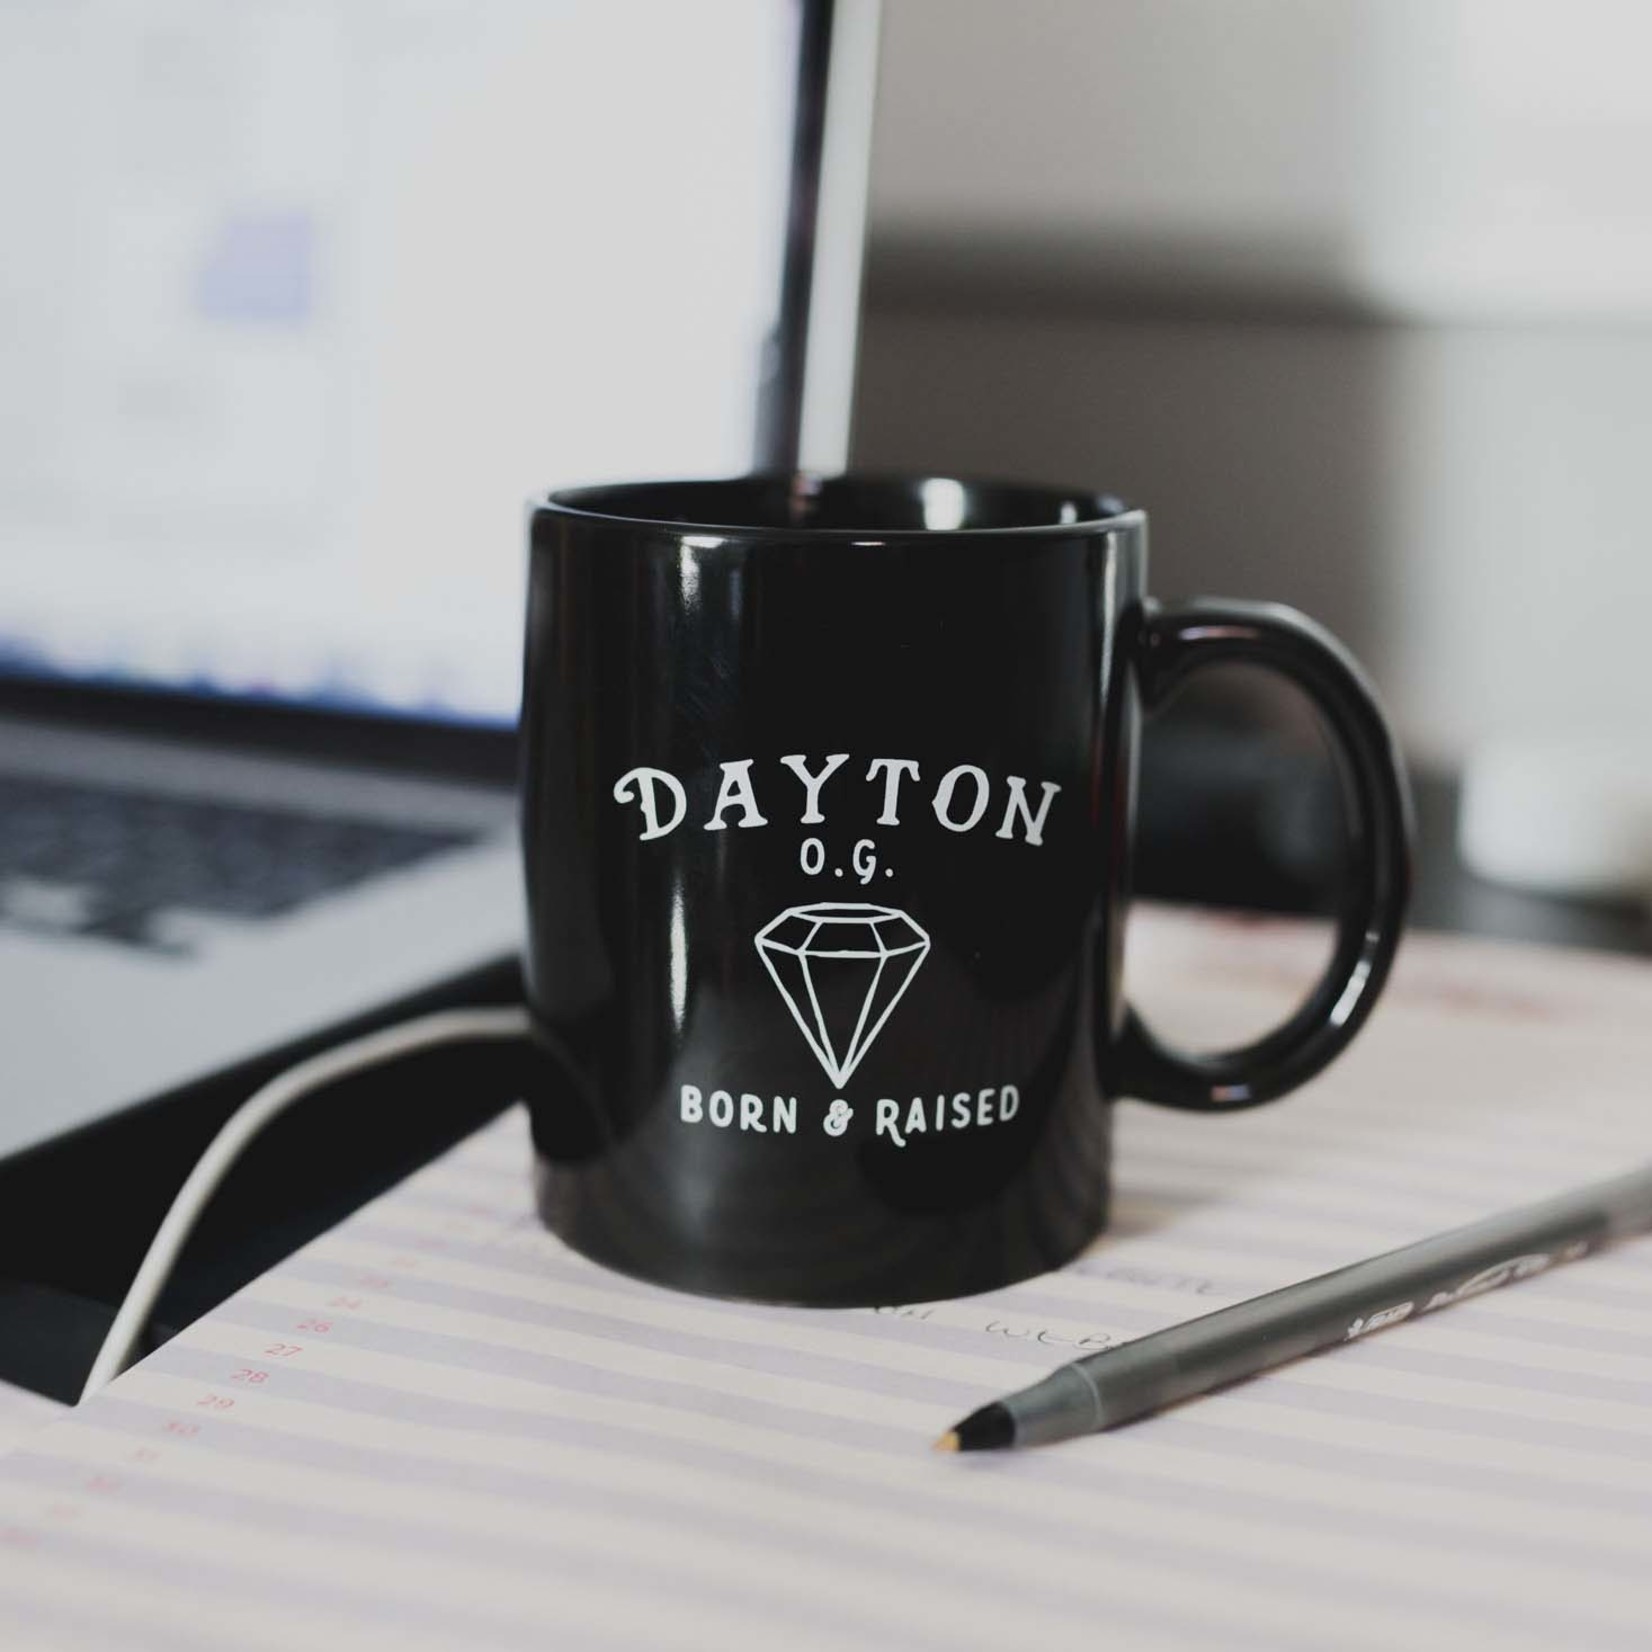 Dayton O.G. Mug